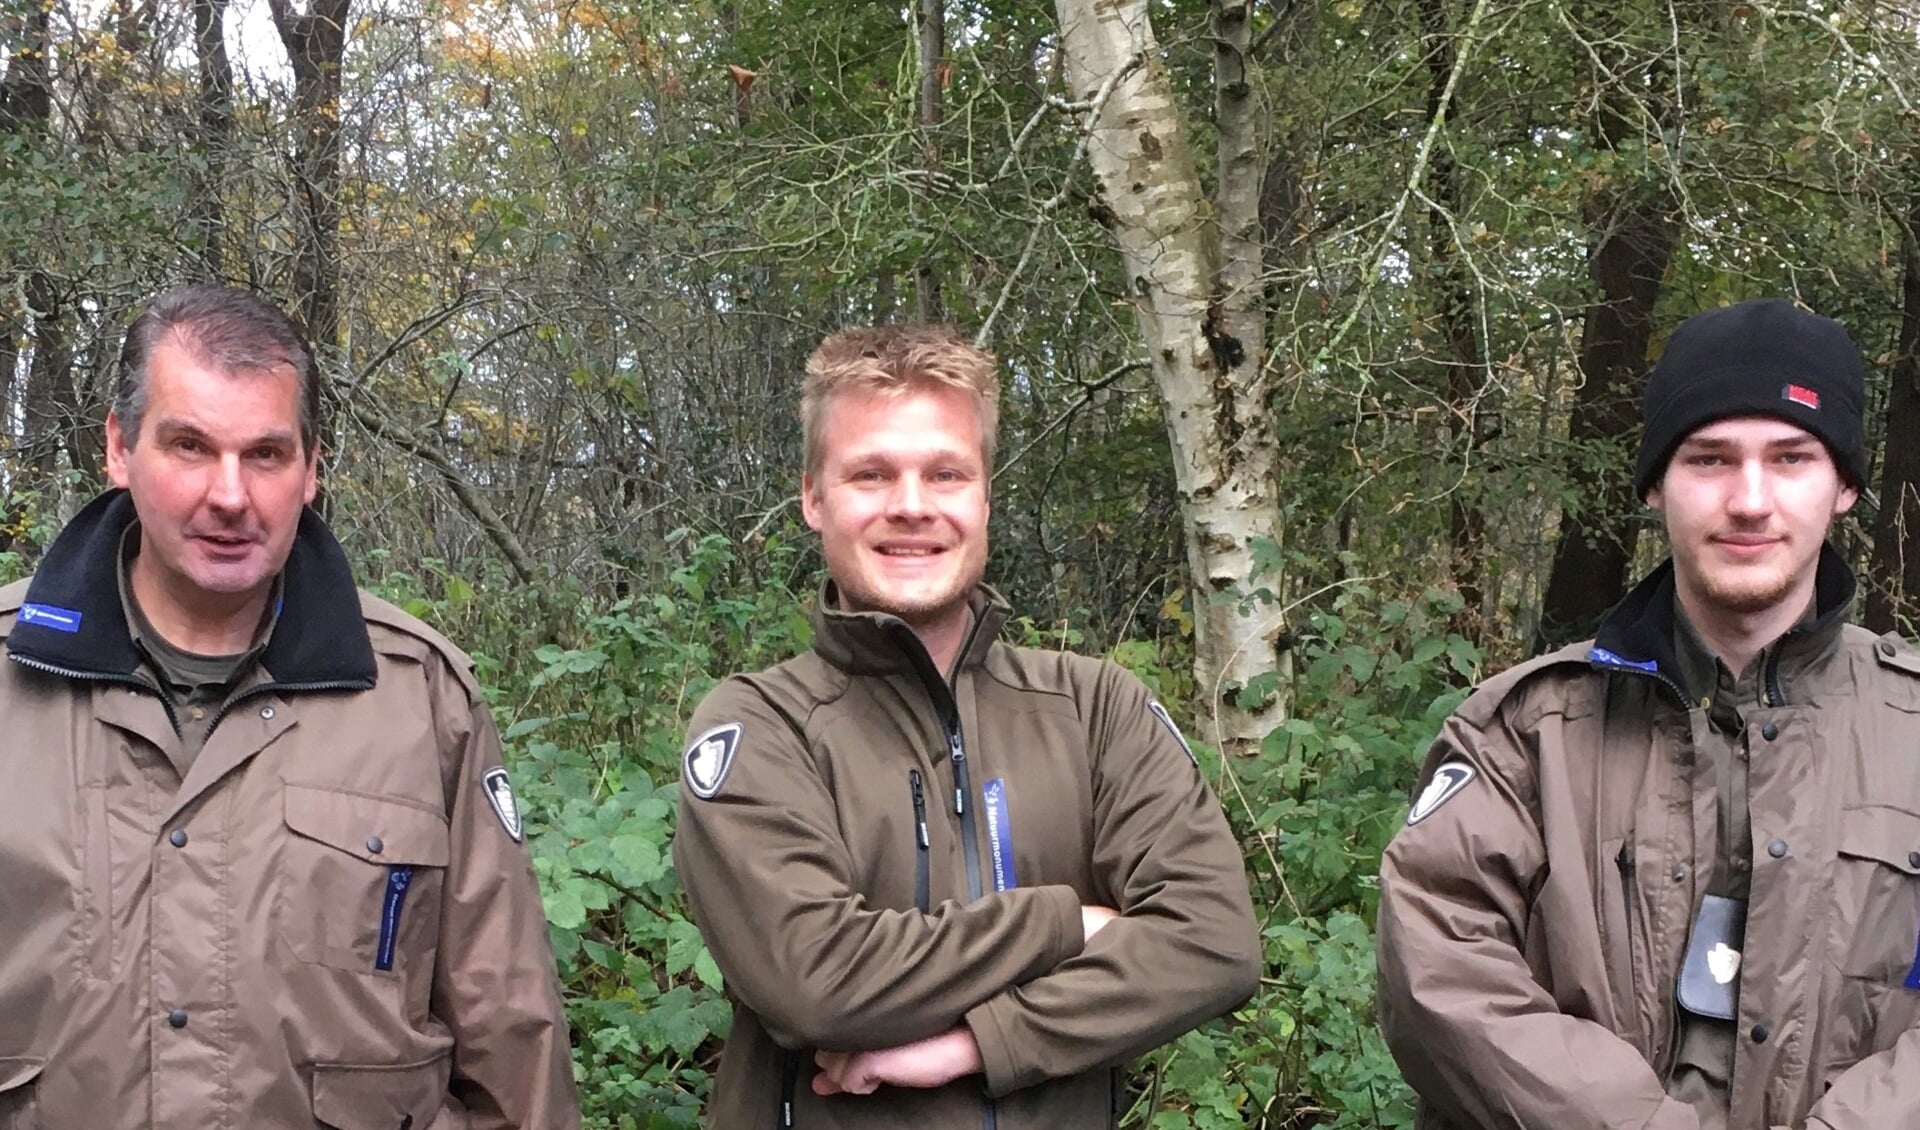 De nieuwe BOA boswachters: Roy, Nick en Jur.